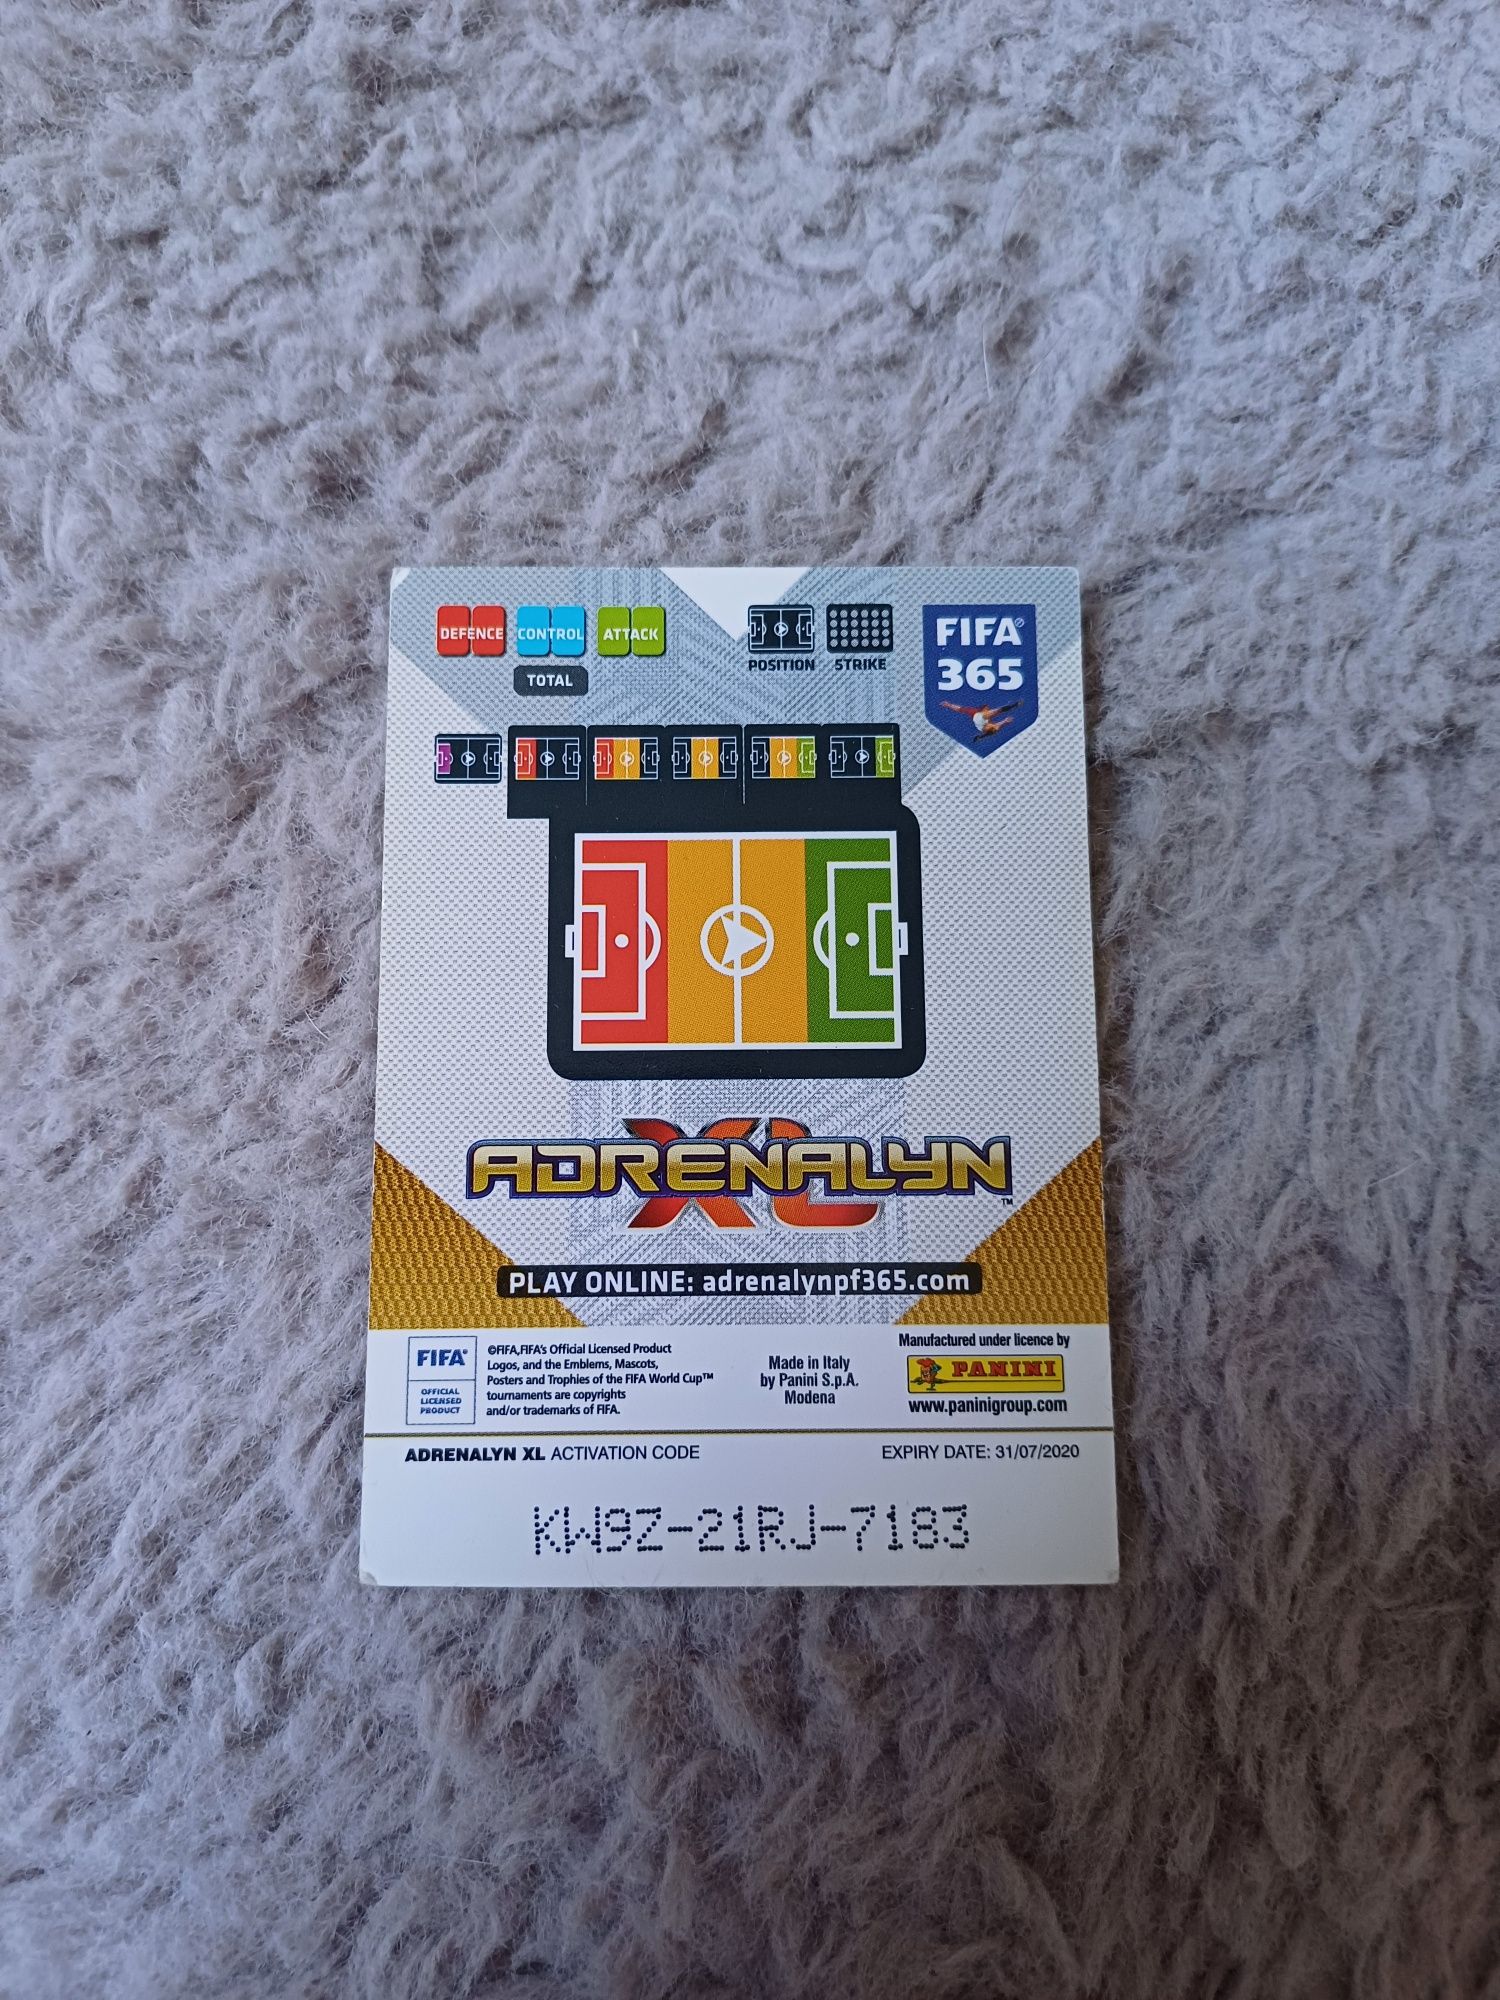 INVICIBLE karta piłkarska Fifa 2020